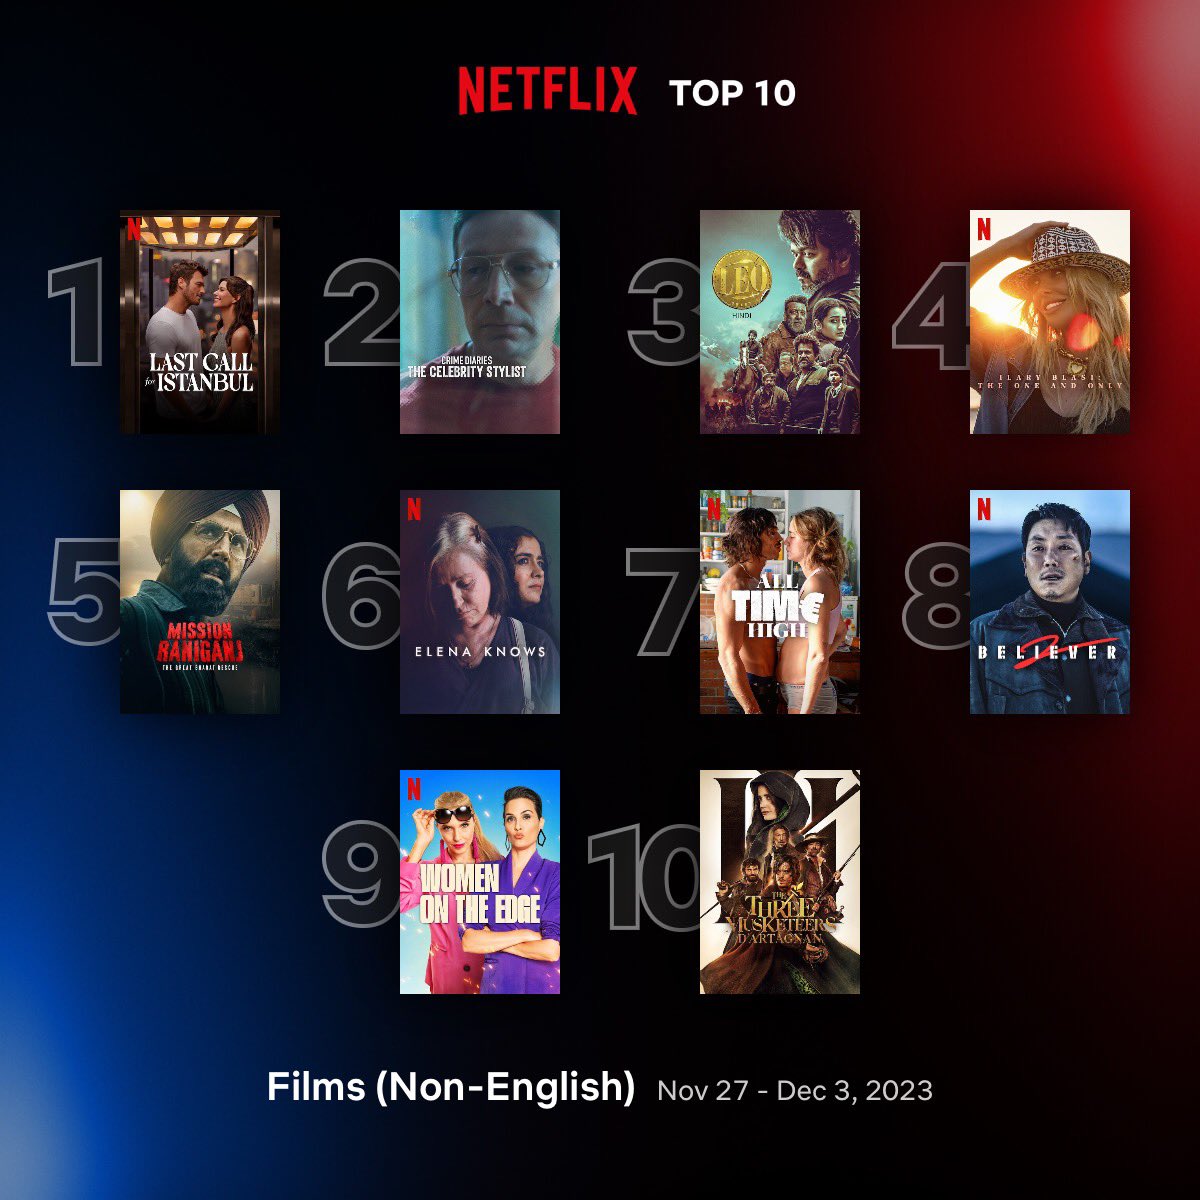 Global Top 10 Non-English Films on Netflix between 27 November - 3 December

1. #LastCallForIstanbul 🇹🇷
2. #CrimeDiaries: The Celebrity Stylist 🇨🇴
3. #Leo (Hindi) 🇮🇳 
4. #IlaryBlasi: The One and Only 🇮🇹
5. #MissionRaniganj 🇮🇳
6. #ElenaKnows 🇦🇷
7. #AllTimeHigh 🇫🇷
8. #Believer2 🇰🇷…